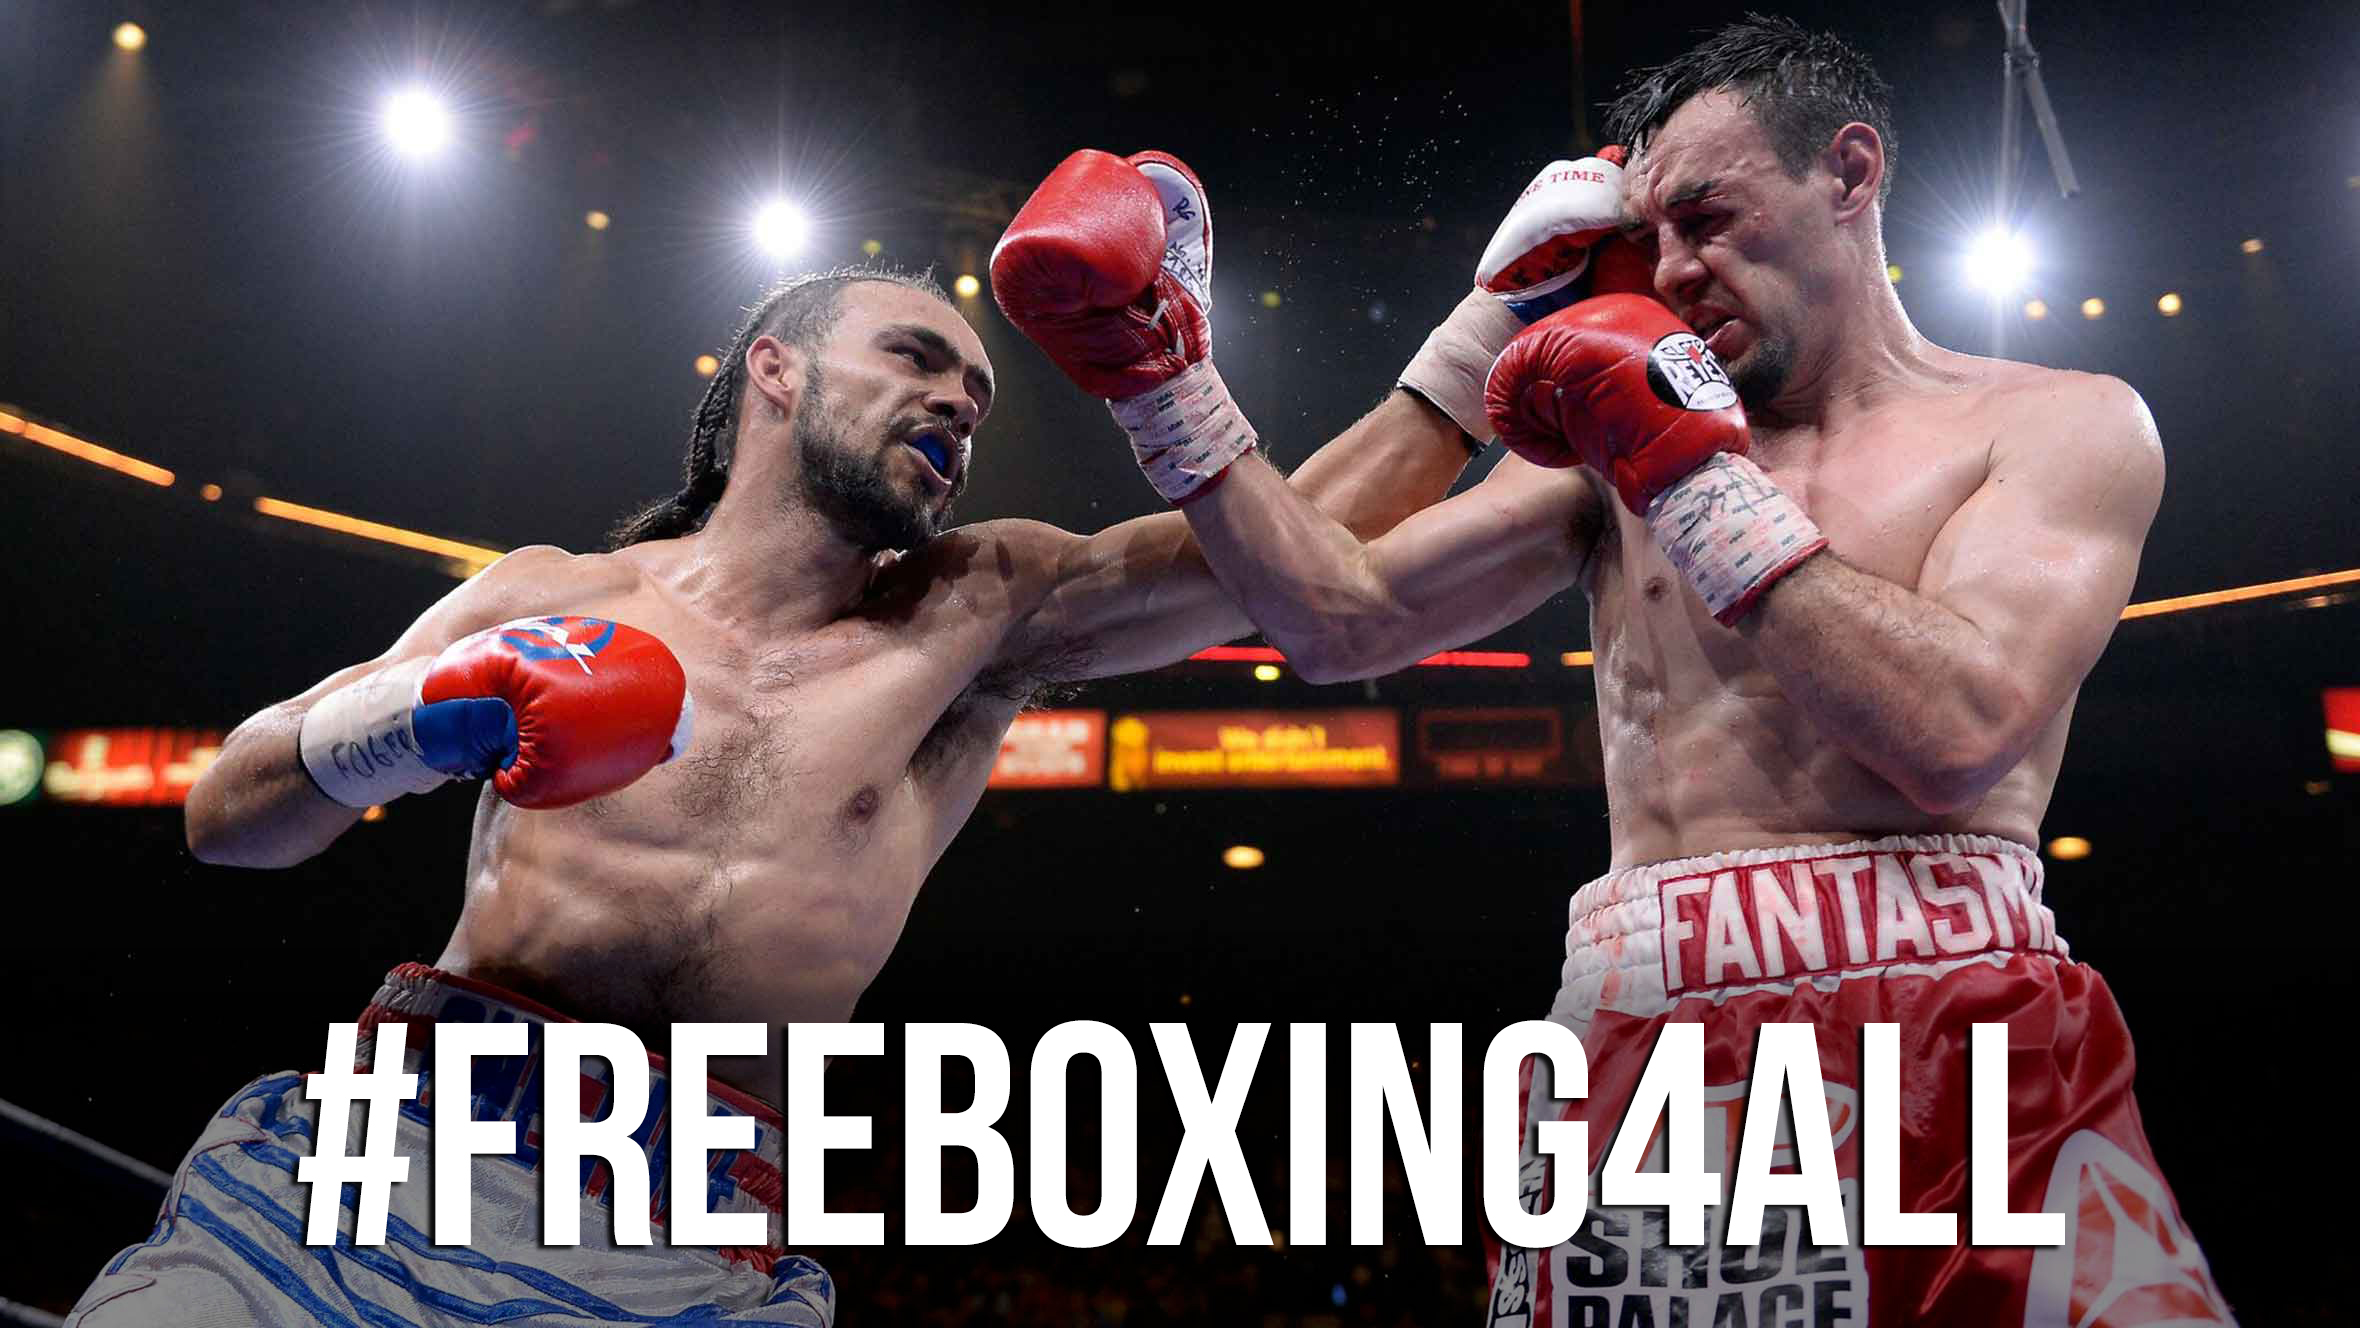 Premier Boxing Champions celebrates #FreeBoxing4All